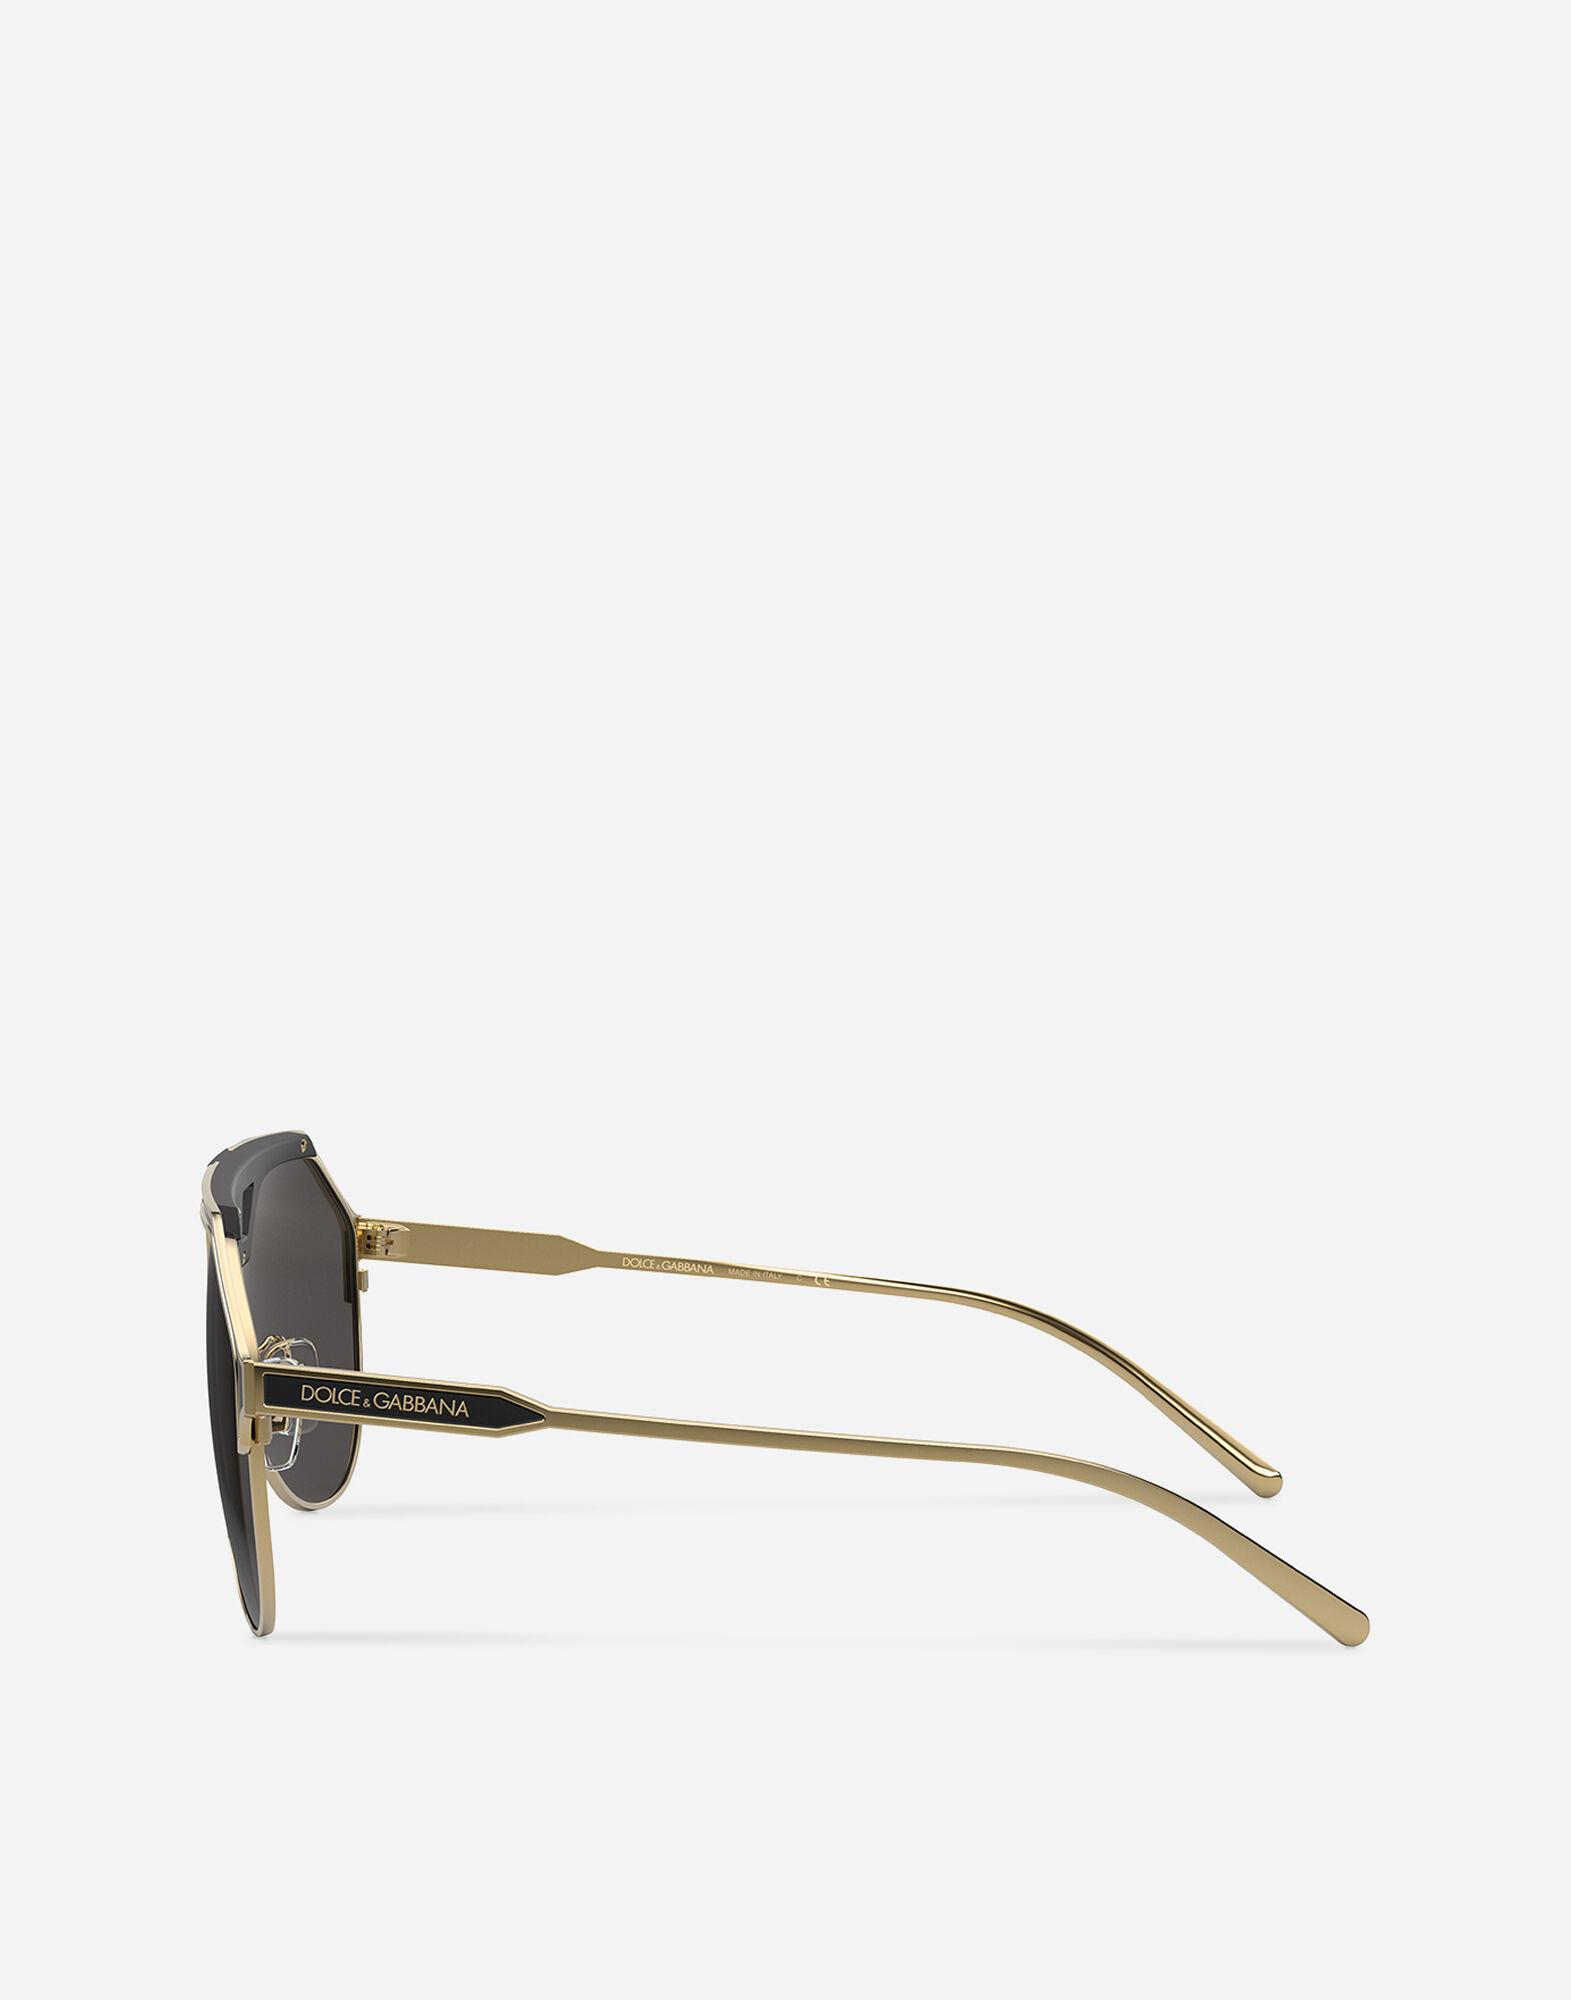 Dolce & Gabbana Miami Sunglasses in Gold (Metallic) for Men - Lyst